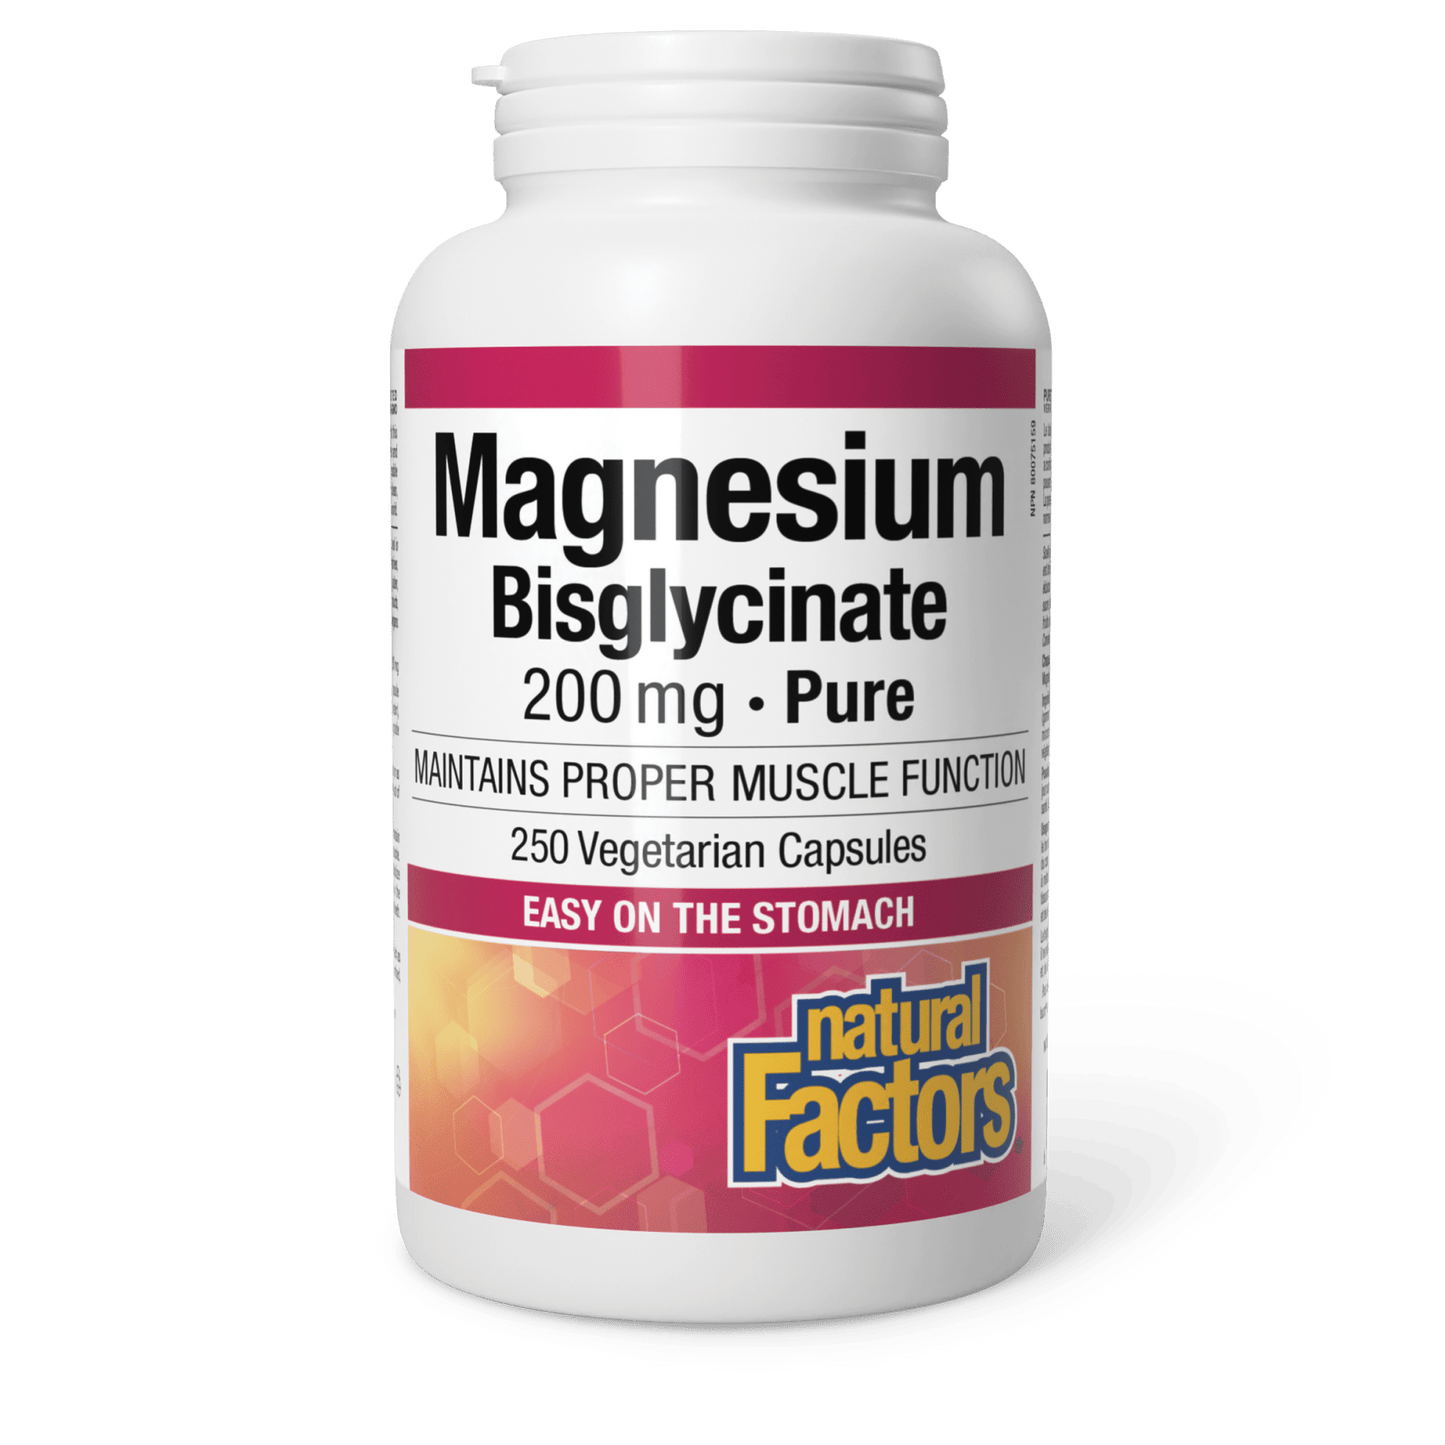 Magnesium Bisglycinate Pure 200 mg, Natural Factors|v|image|1644